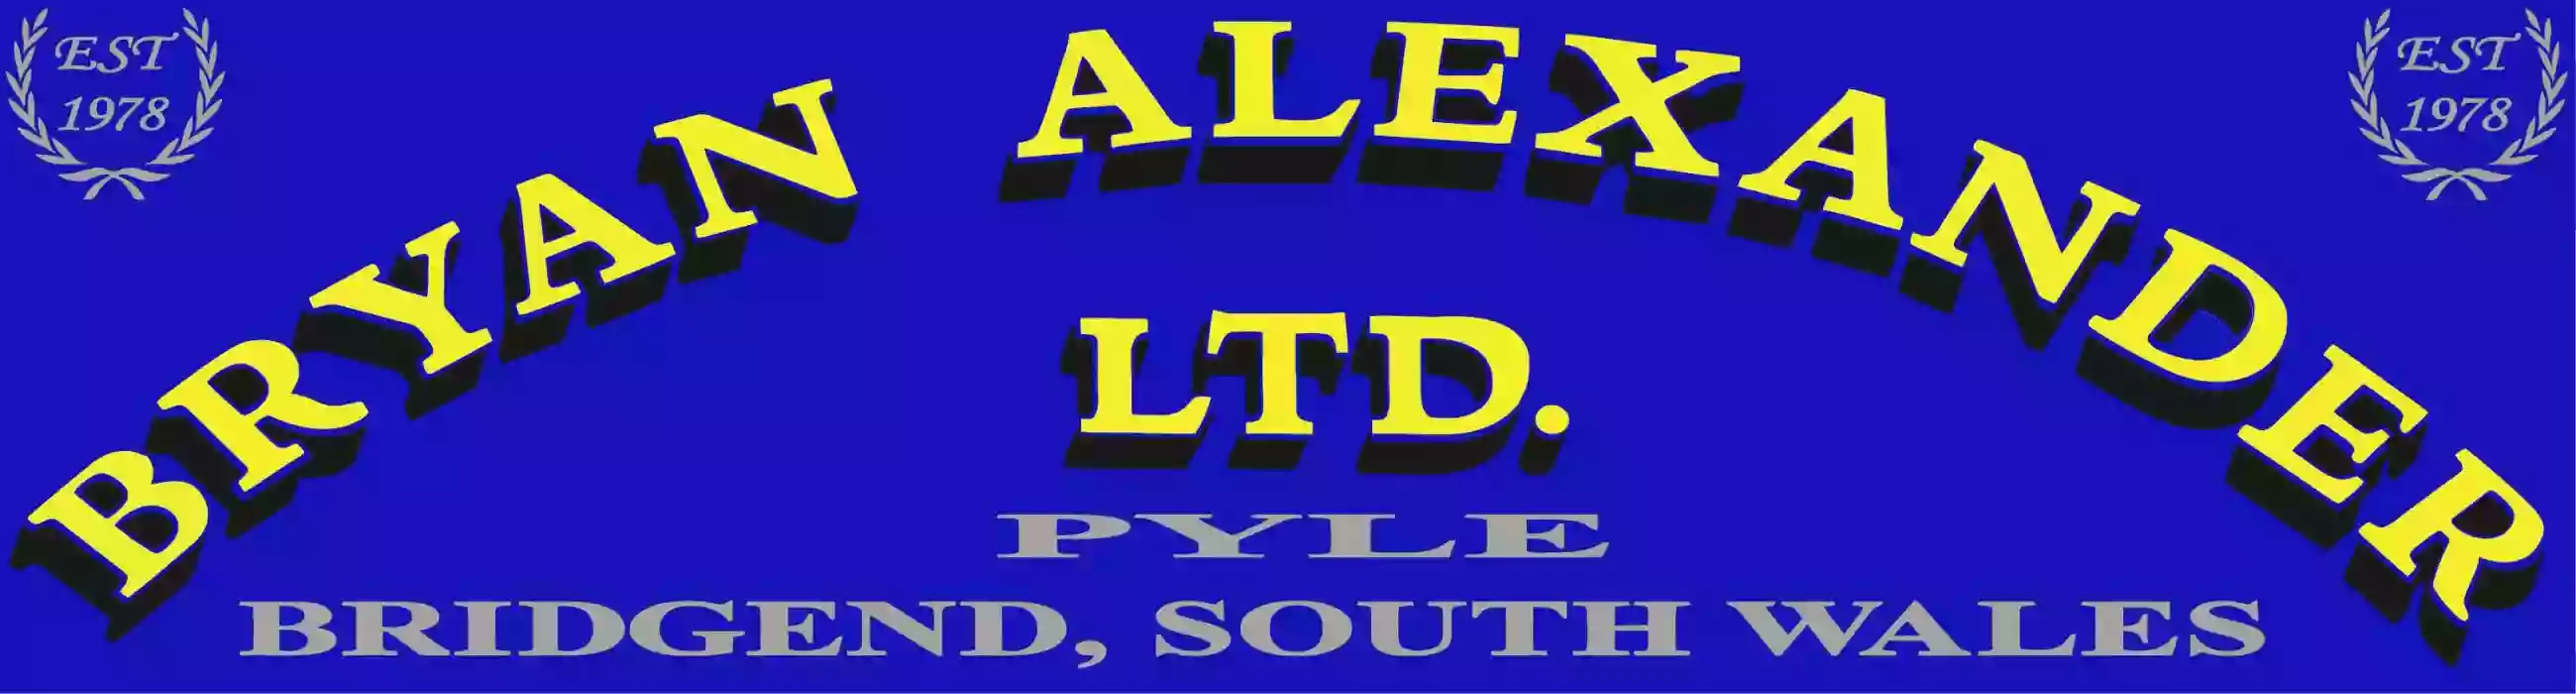 Bryan Alexander Ltd